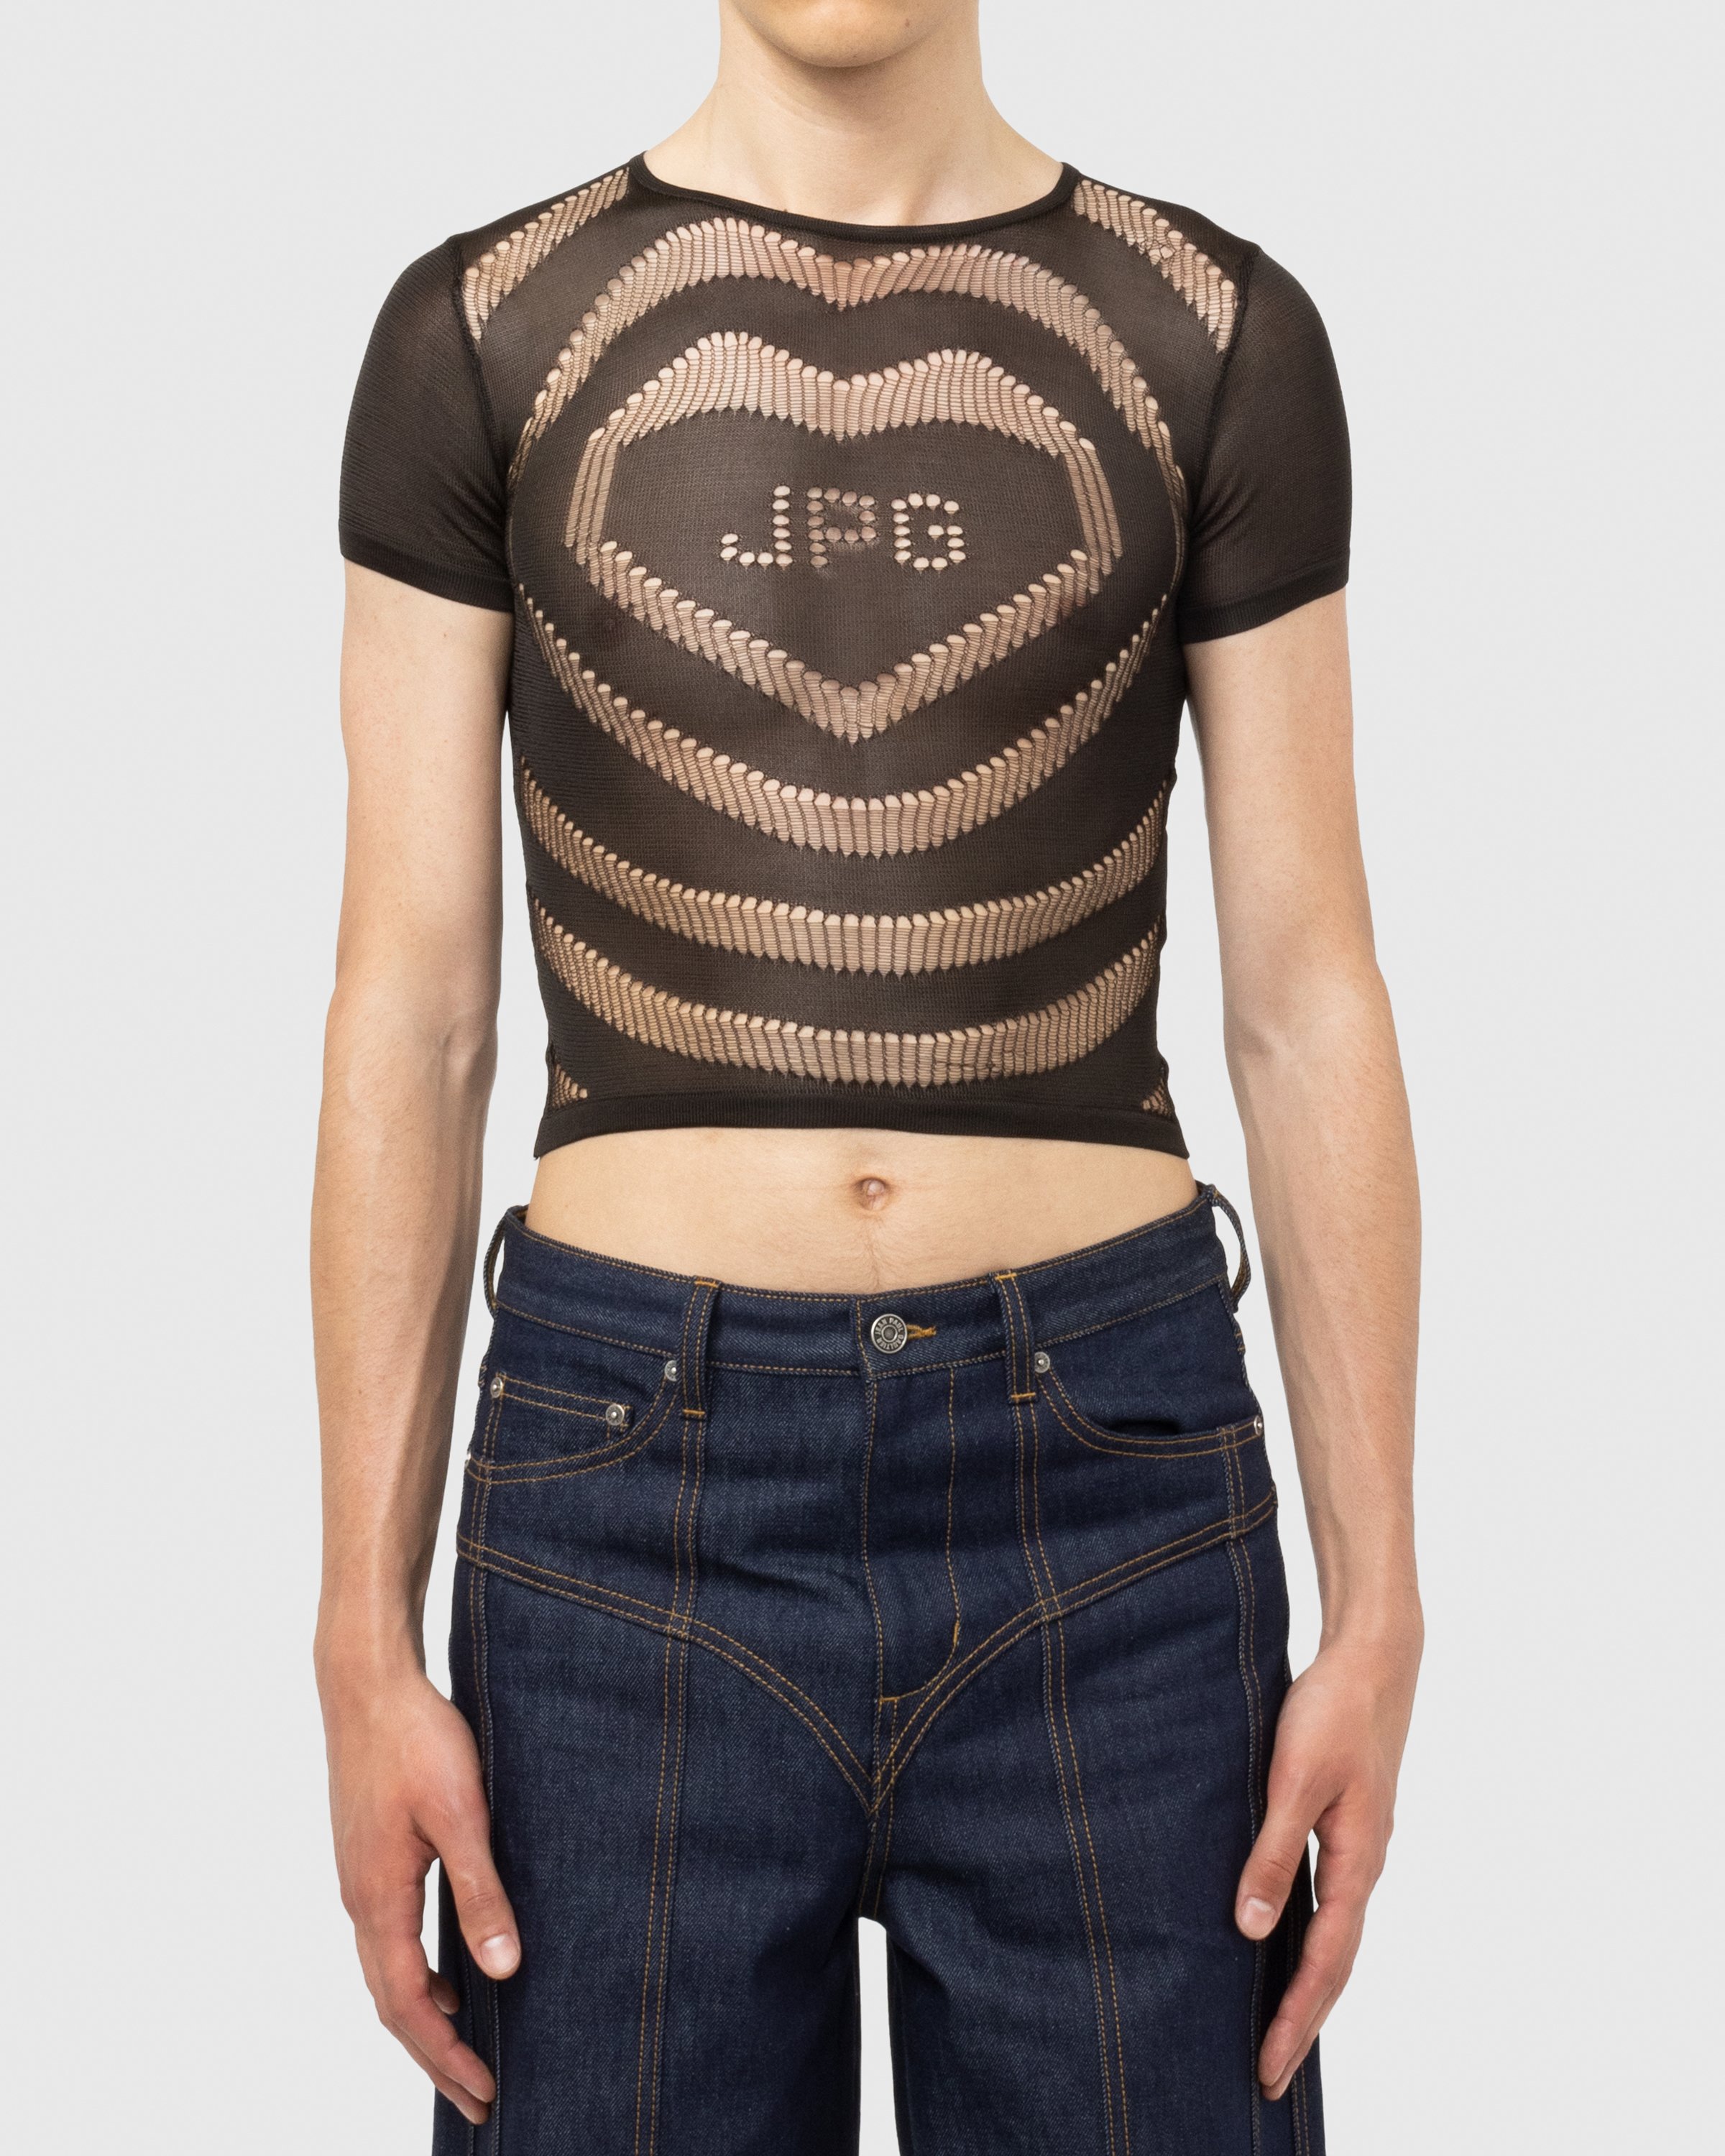 Jean Paul Gaultier - Open-Worked JPG Heart T-Shirt Dark Brown - Clothing - Brown - Image 3